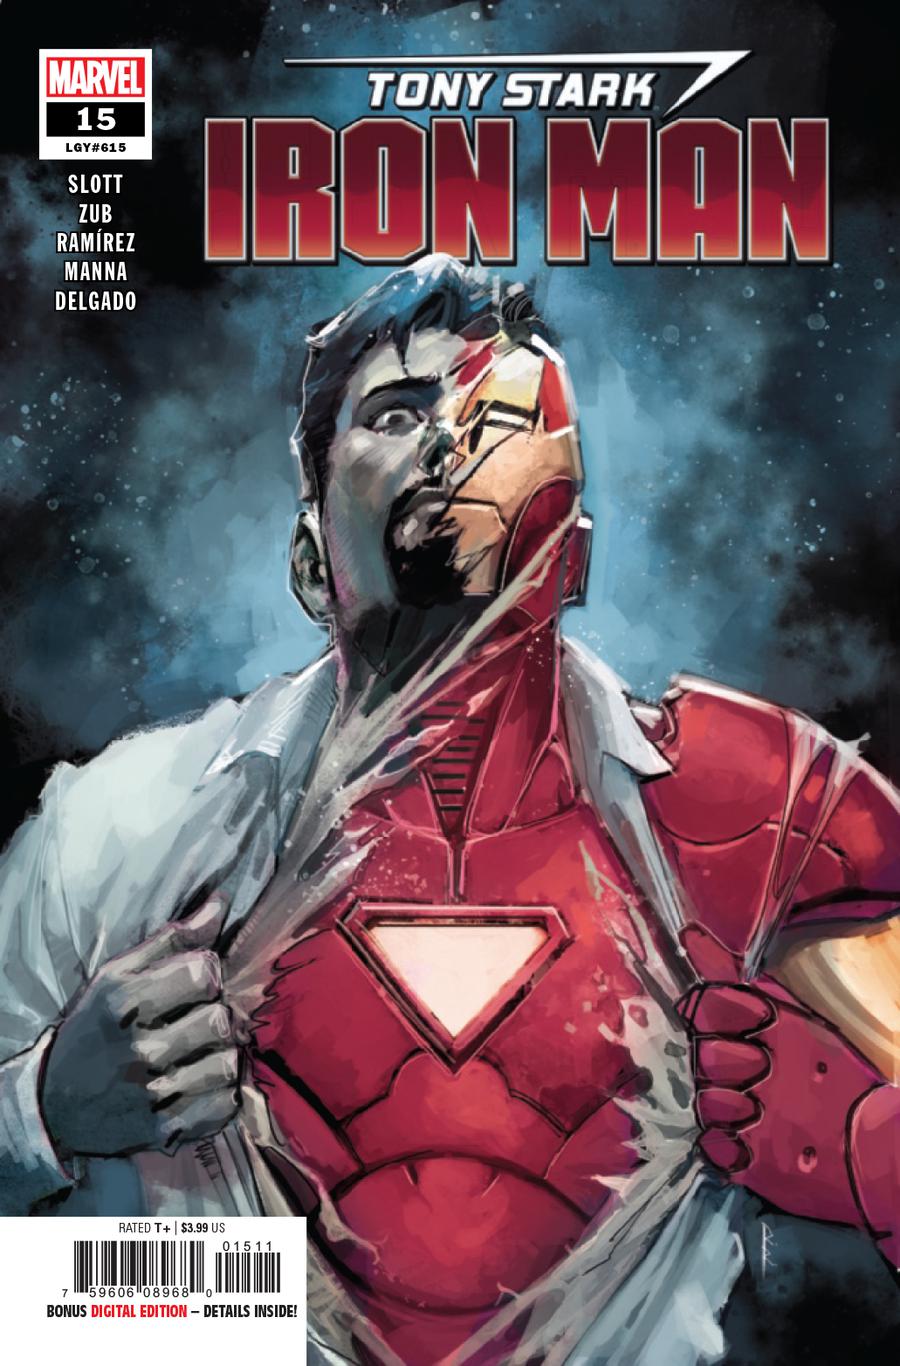 Tony Stark Iron Man #15 Cover A Regular Rod Reis Cover